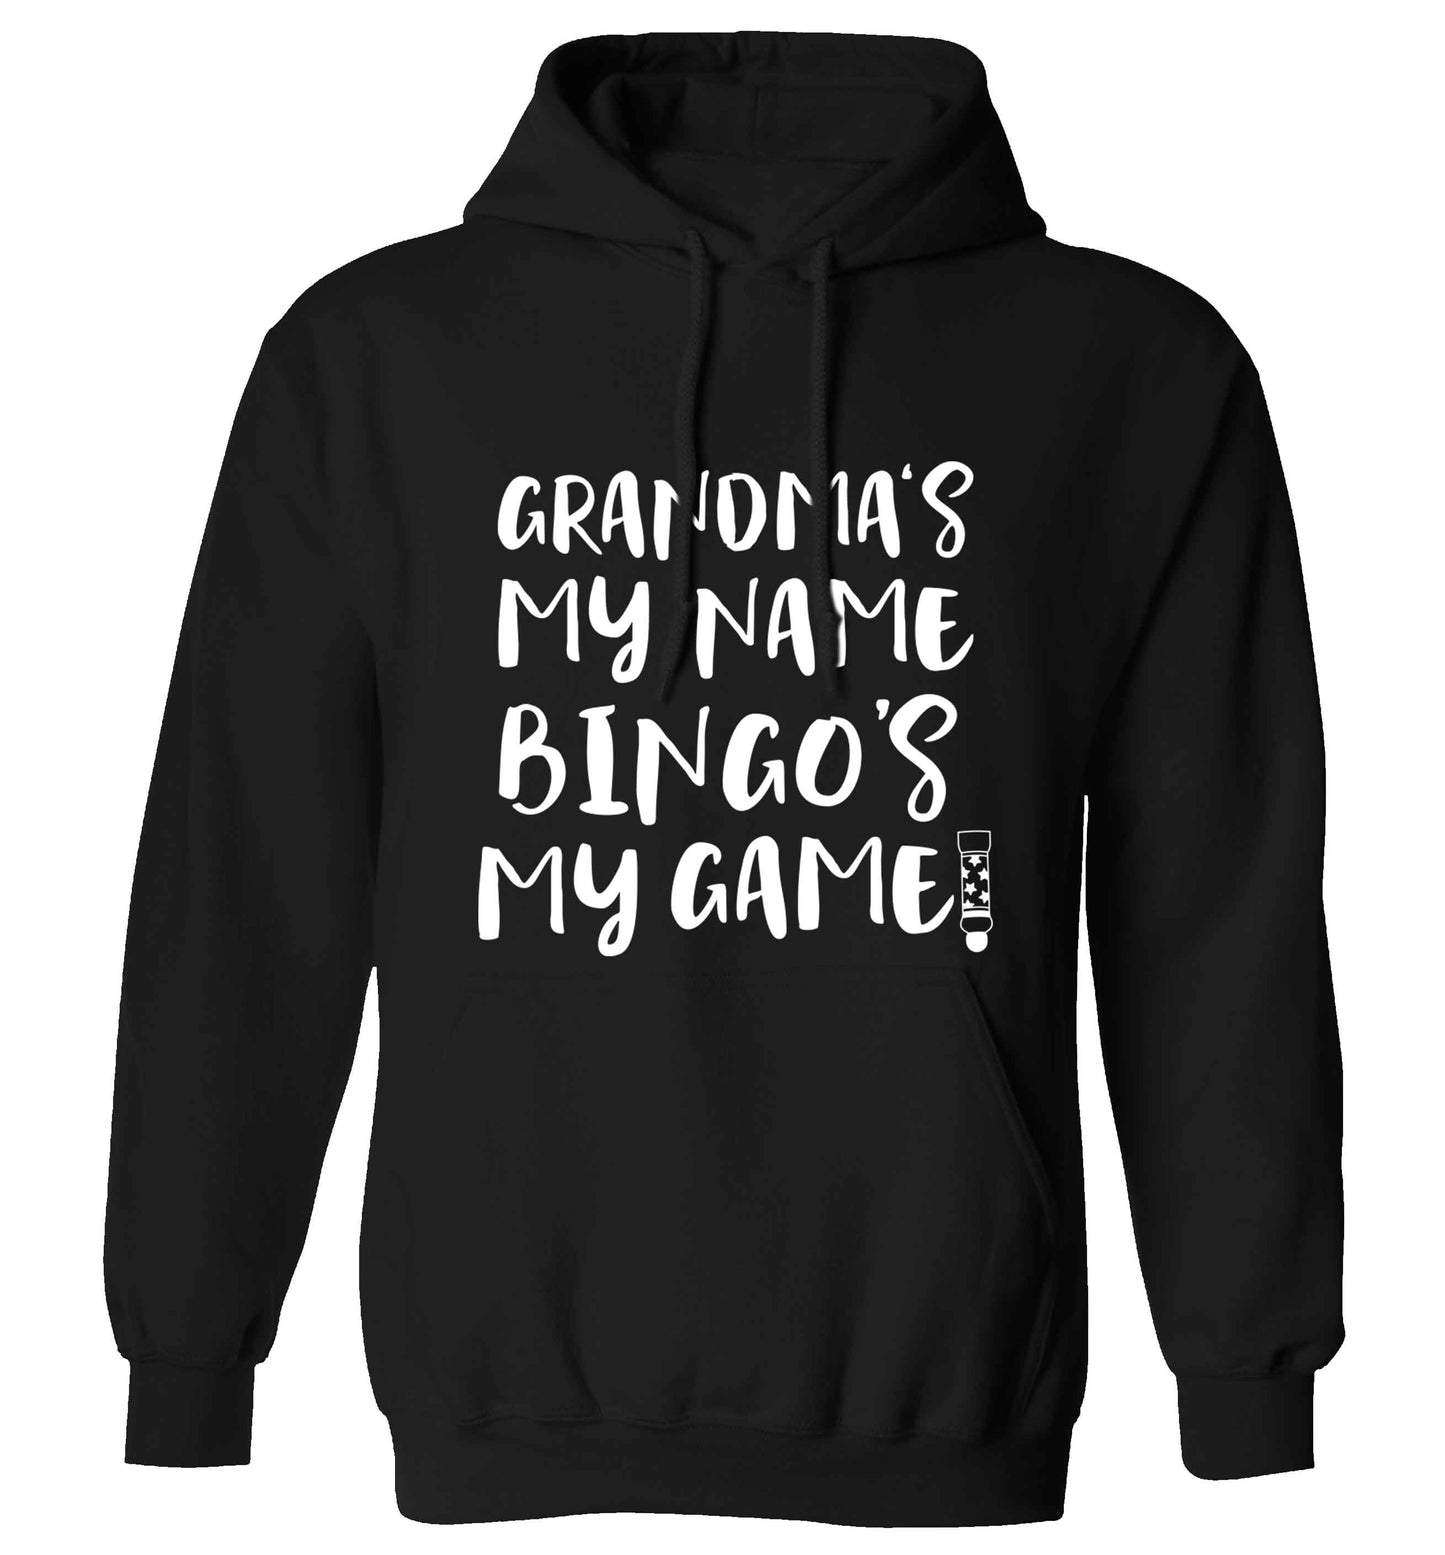 Grandma's my name bingo's my game! adults unisex black hoodie 2XL